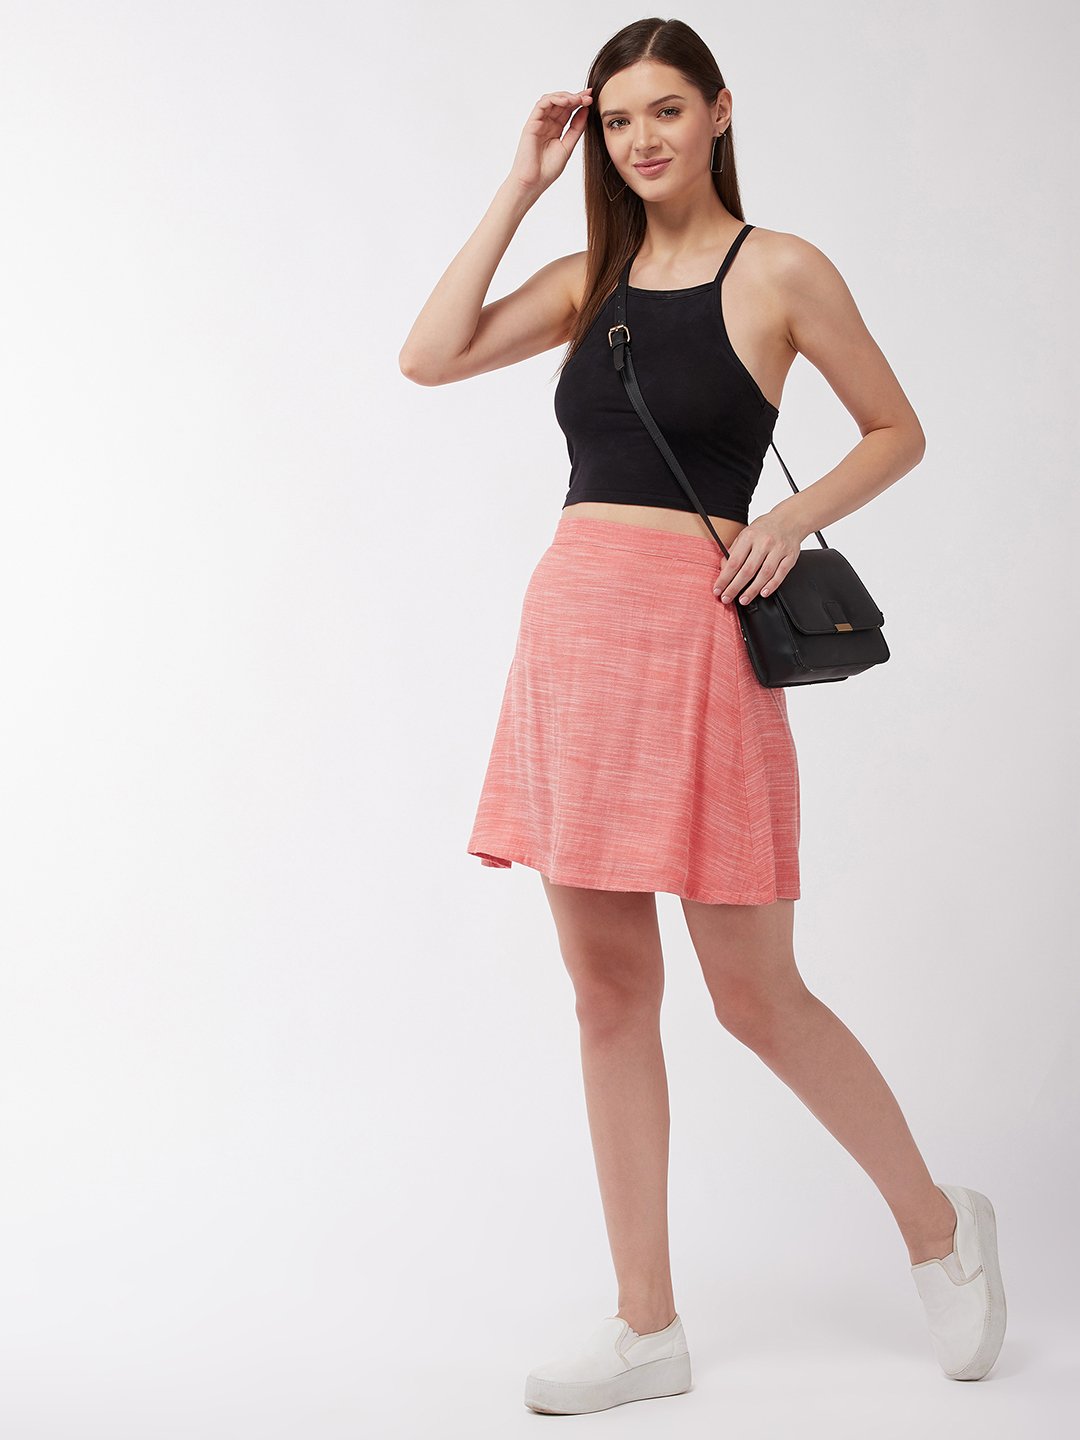 Rouge Pink Short Skirt